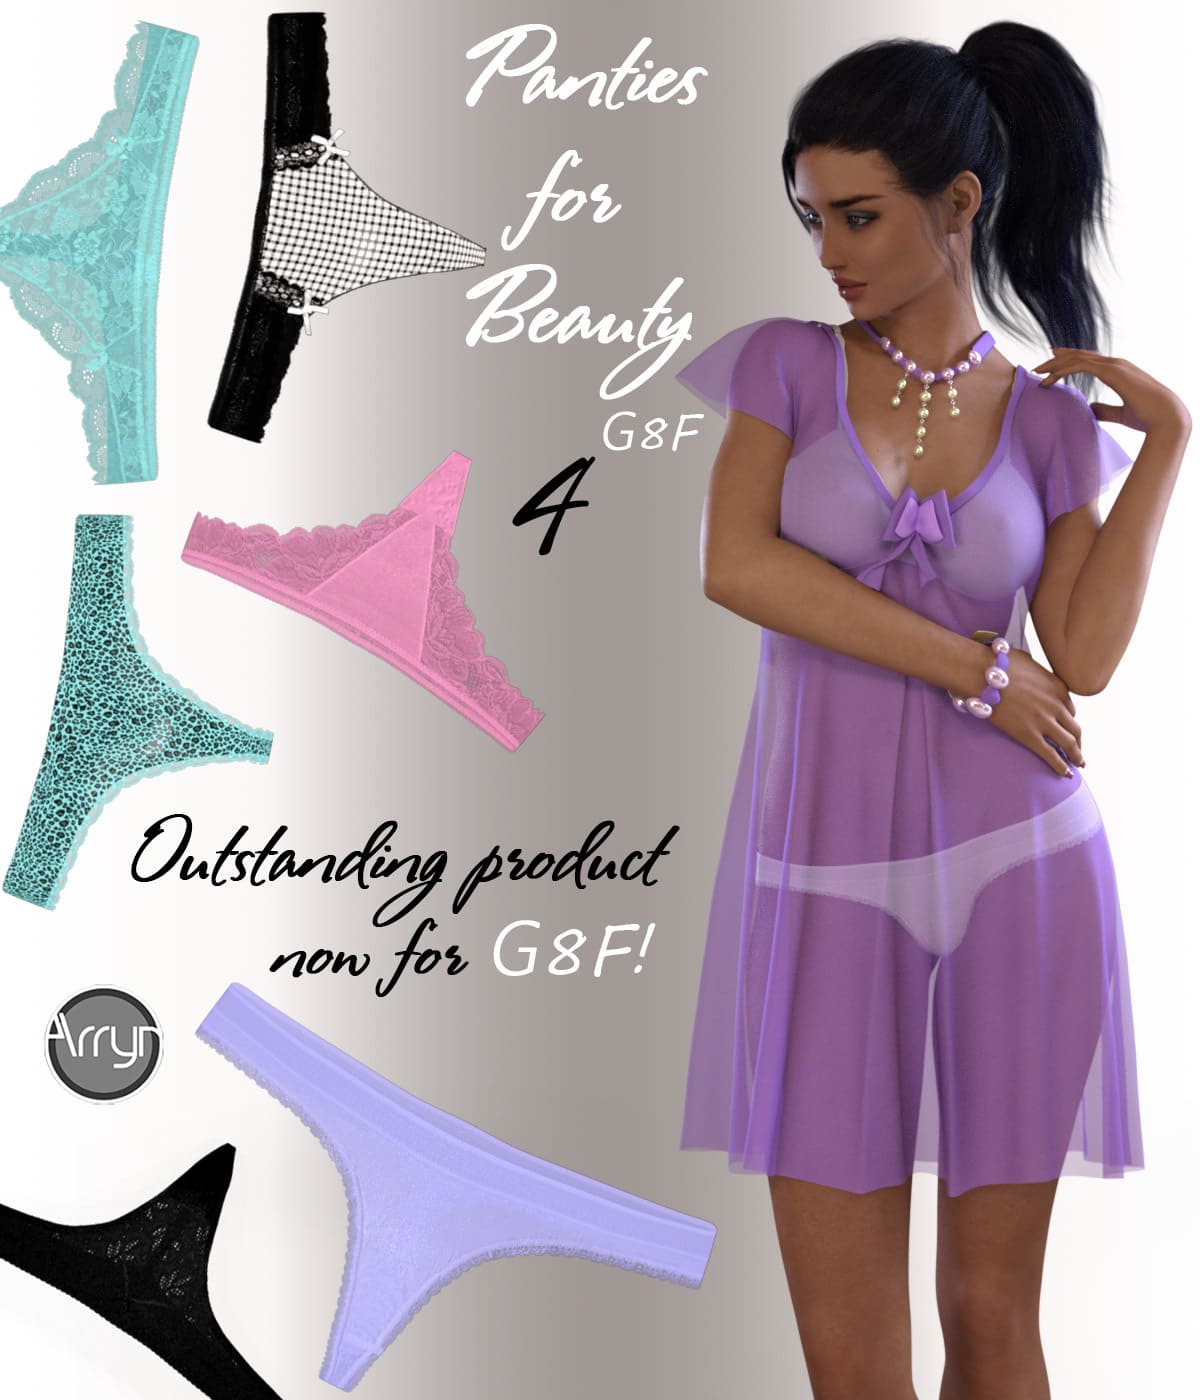 Panties for Beauty G8F 4_DAZ3D下载站